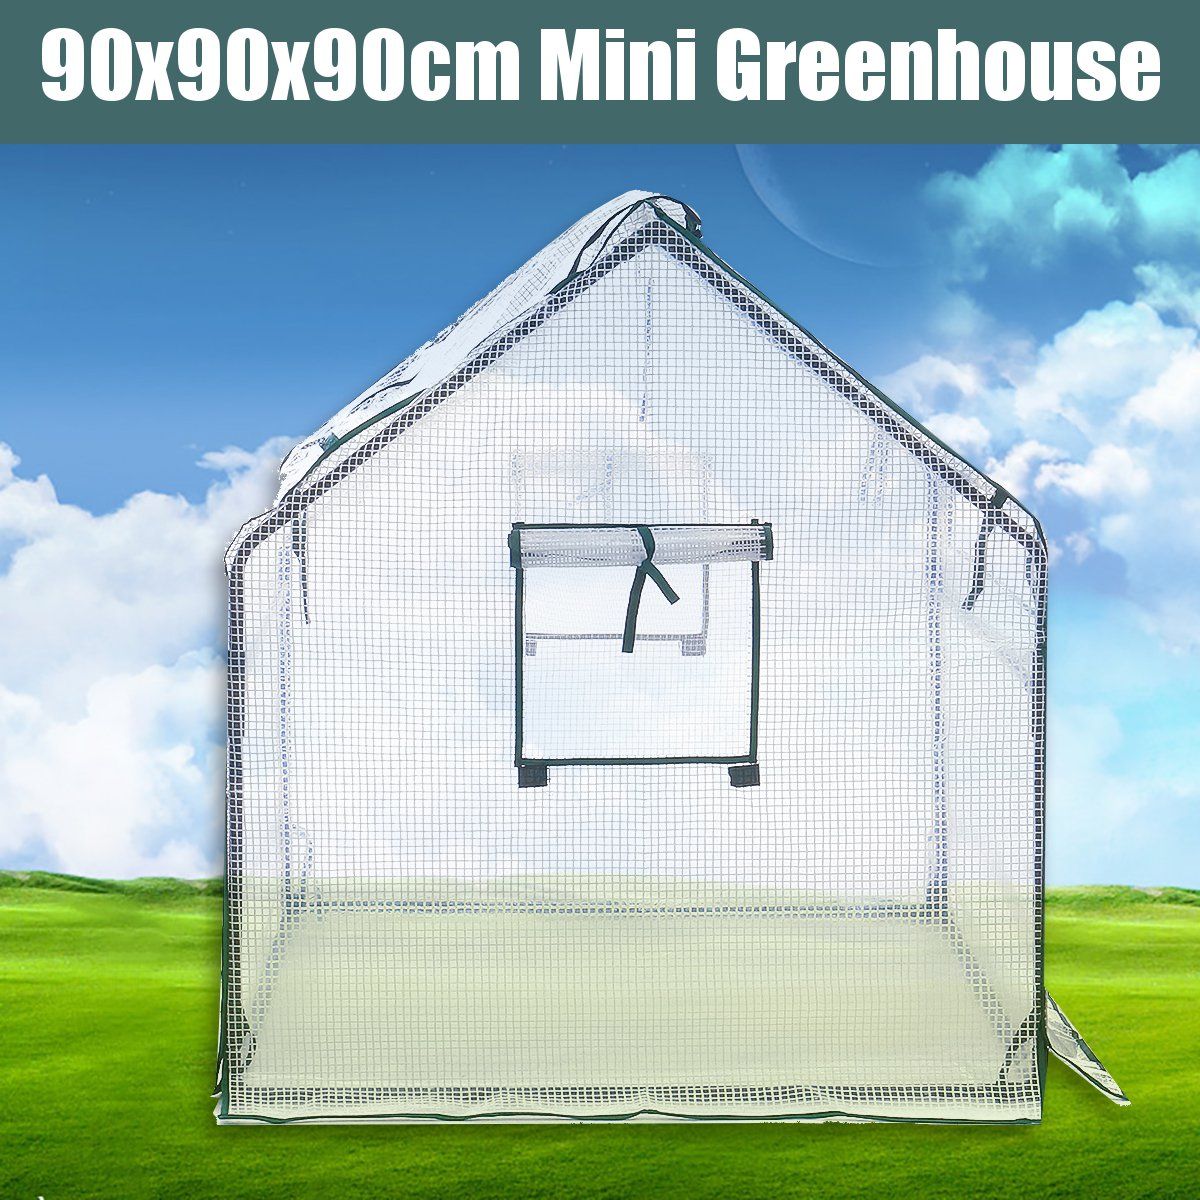 90x90x90cm-Mini-Greenhouse-Home-Outdoor-Flowers-Plants-Gardening-Room-Grow-Box--Winter-Warm-Planting-1579808